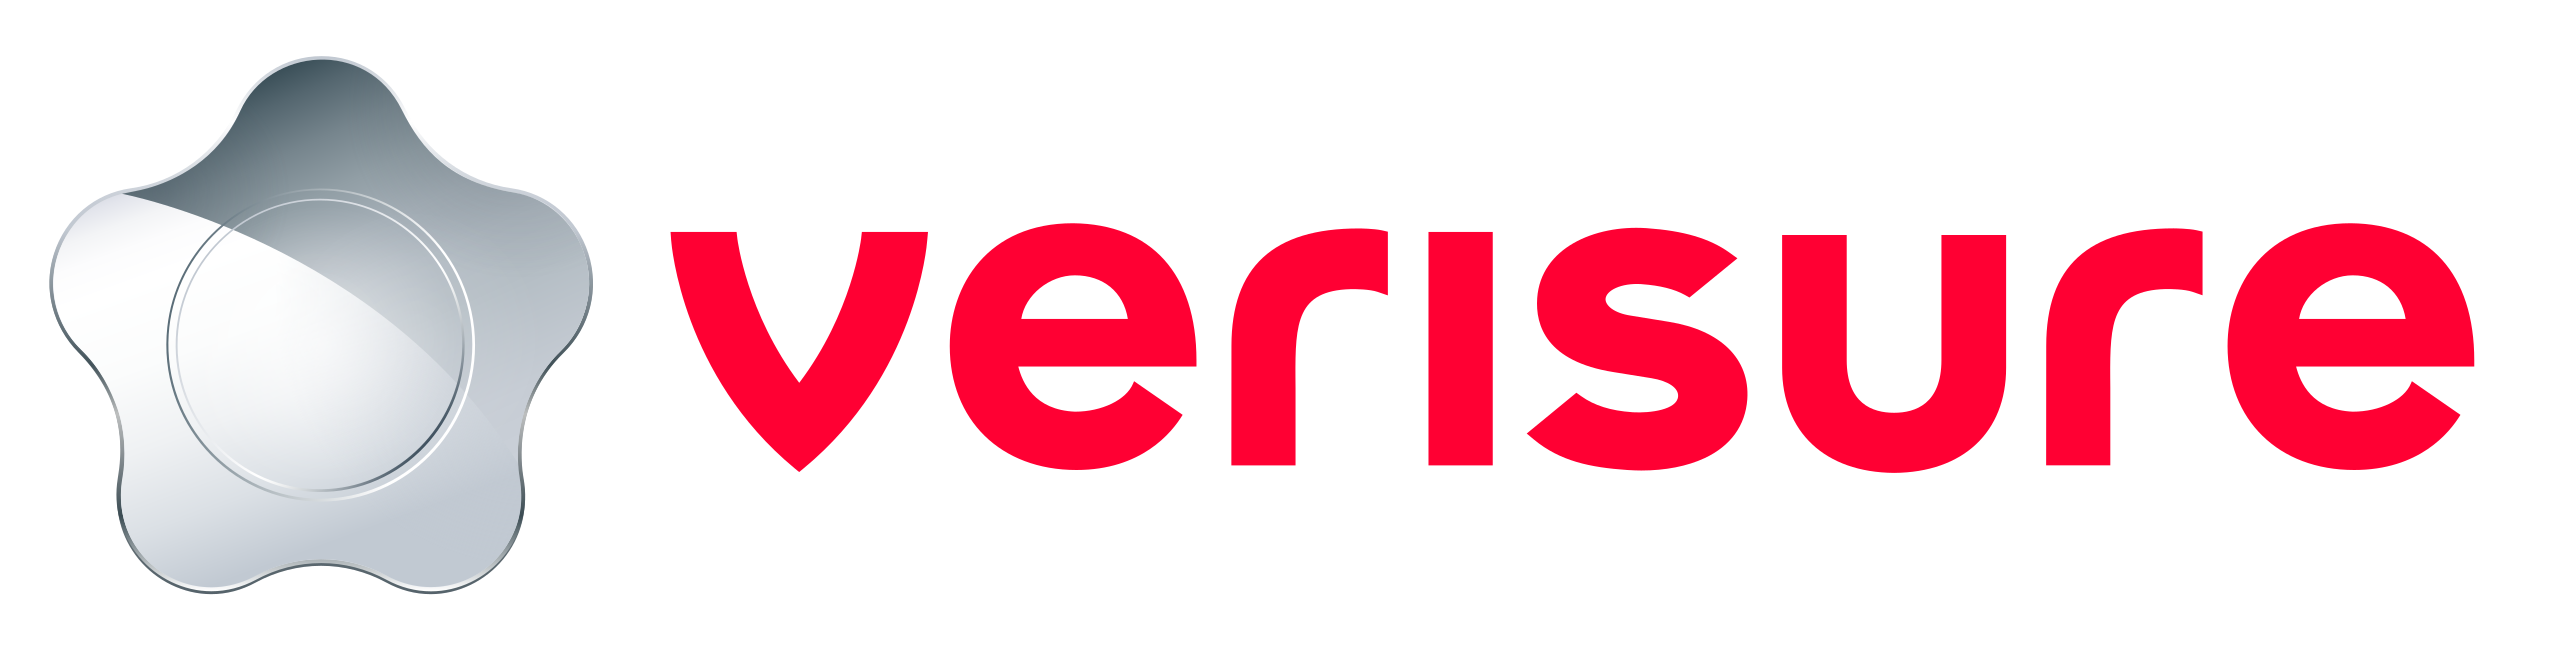 Verisure_Logo